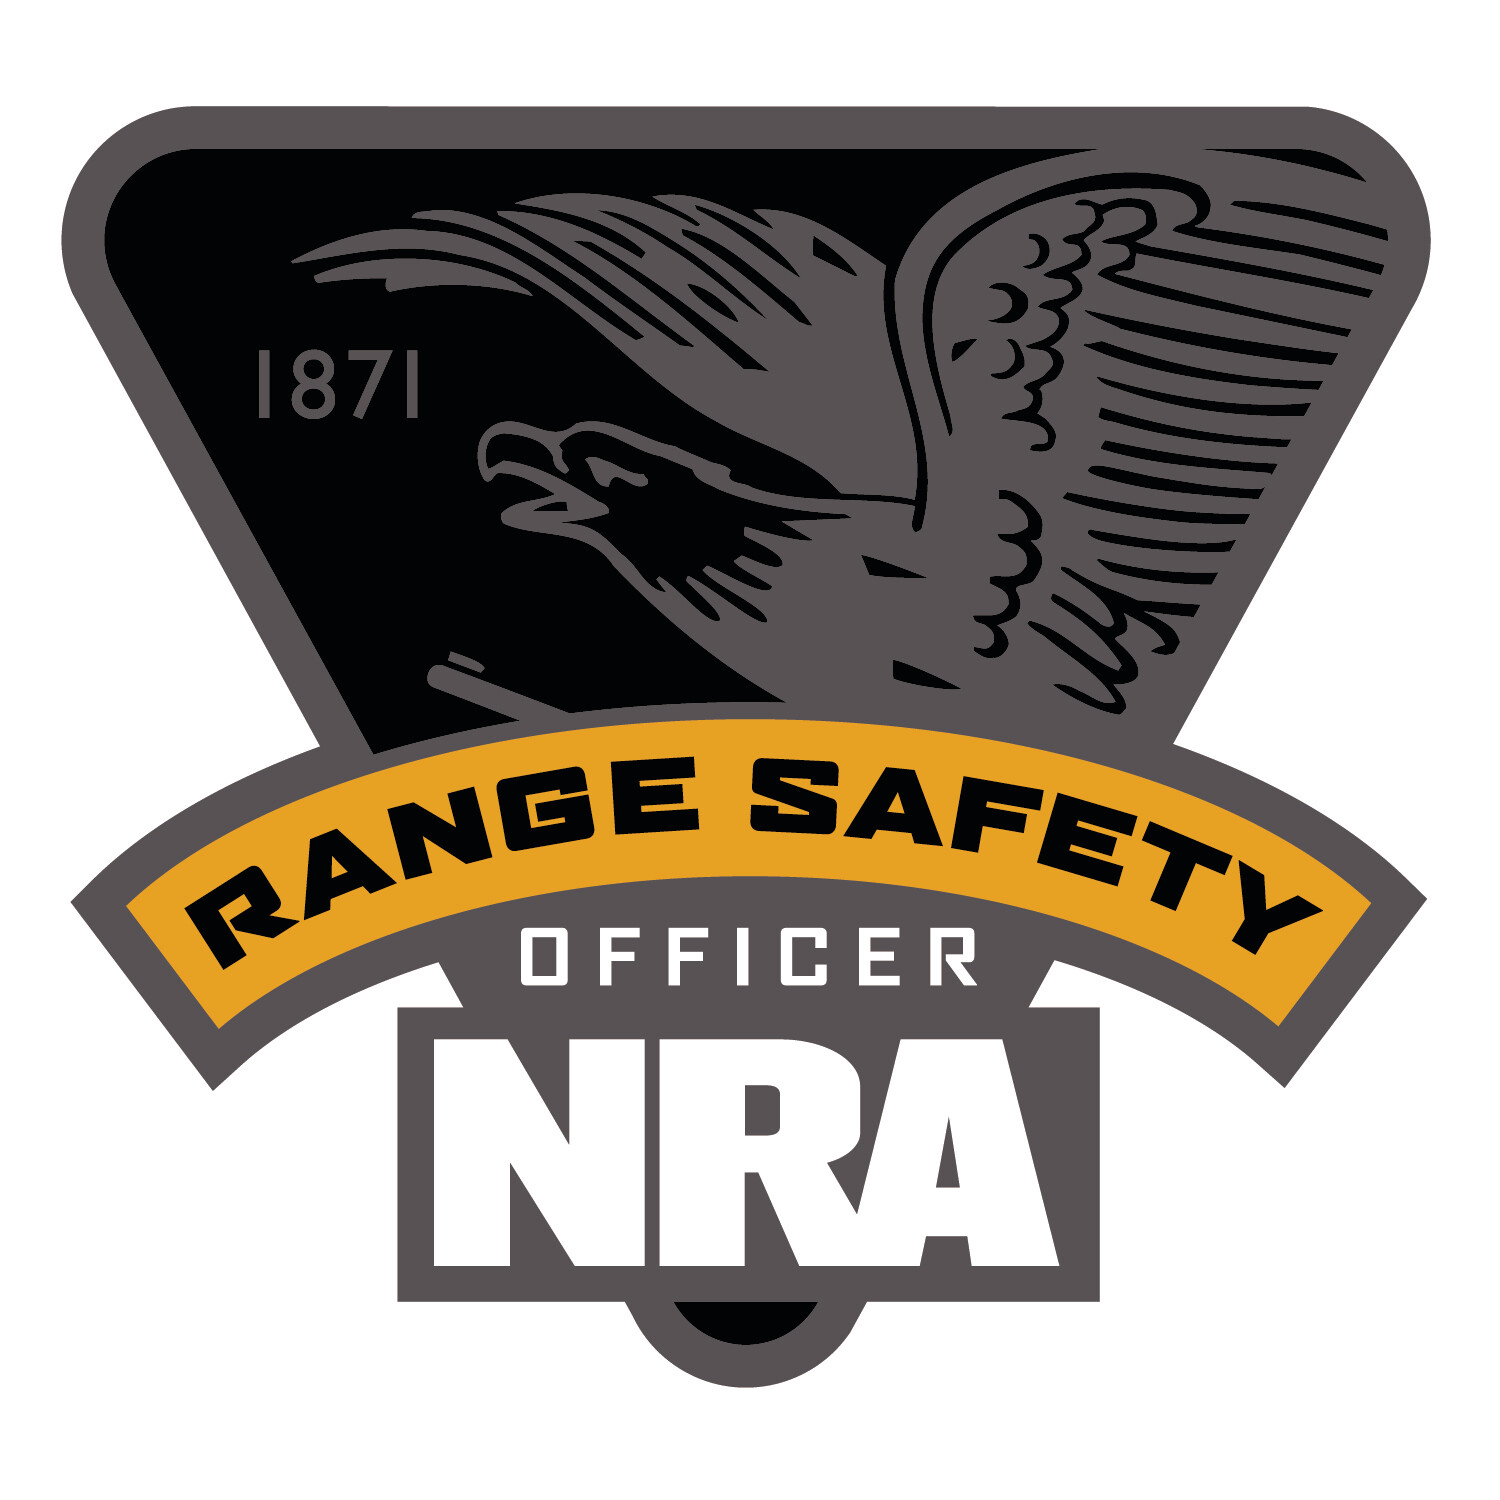 NRA Basic Range Safety Officer Course